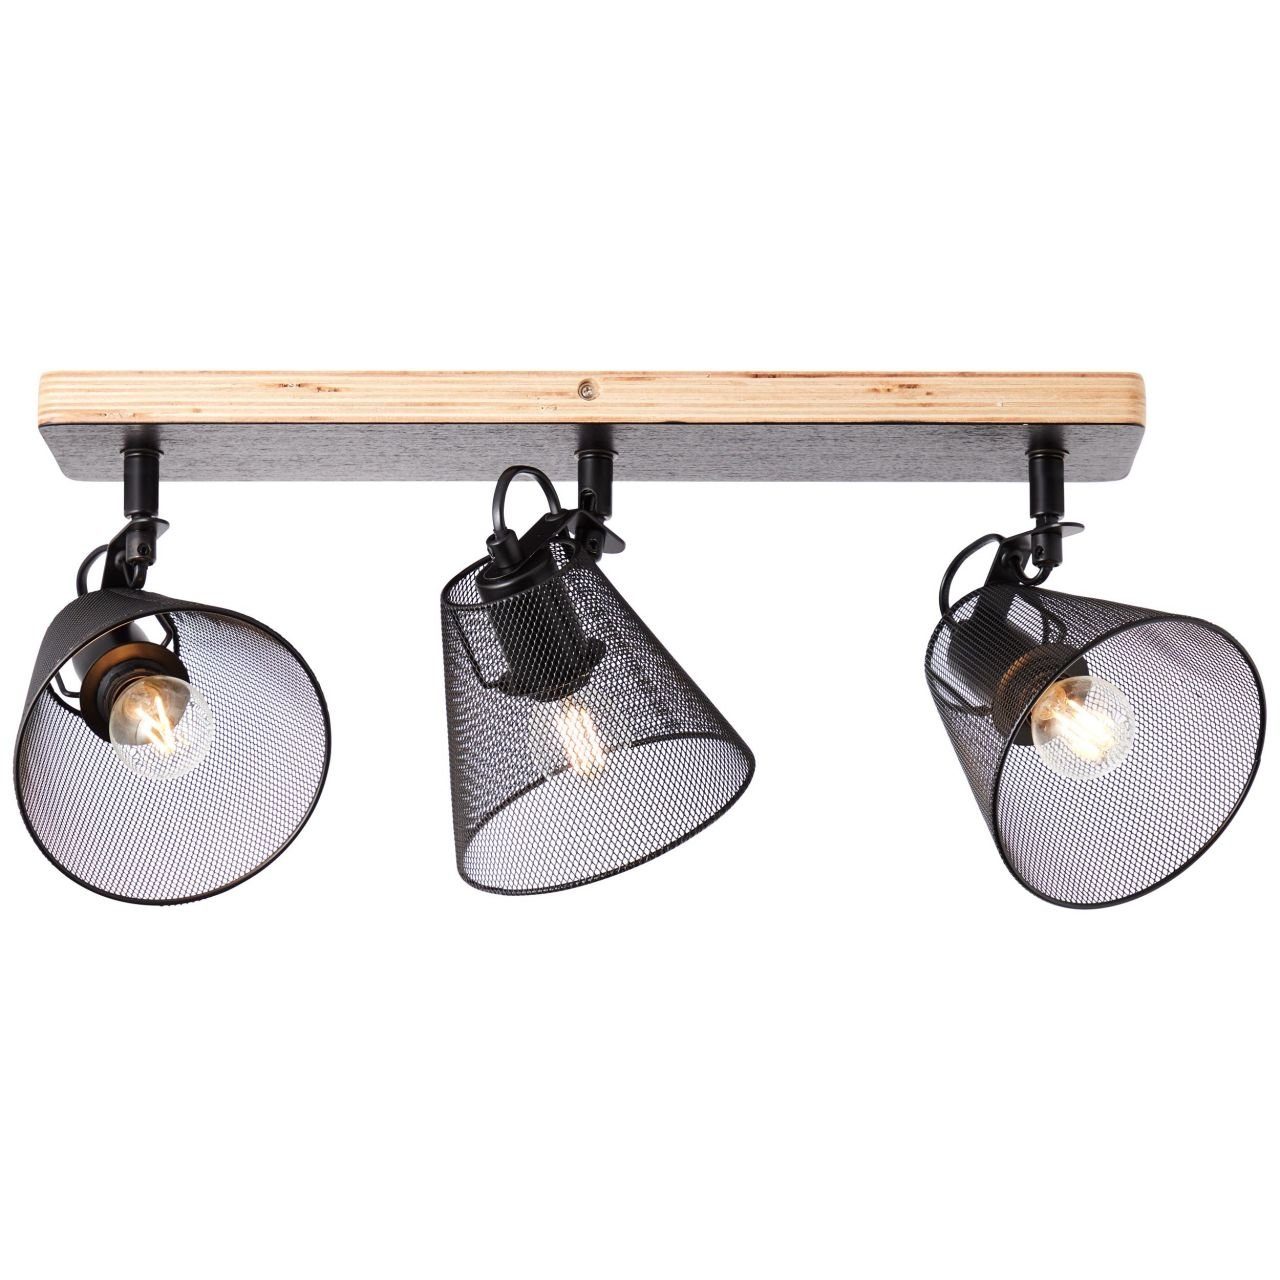 D45 Whole, schwarz/holzfarbend, 3flg Spotbalken Lampe, 3x Brilliant Metall/Holz, Deckenleuchte Whole